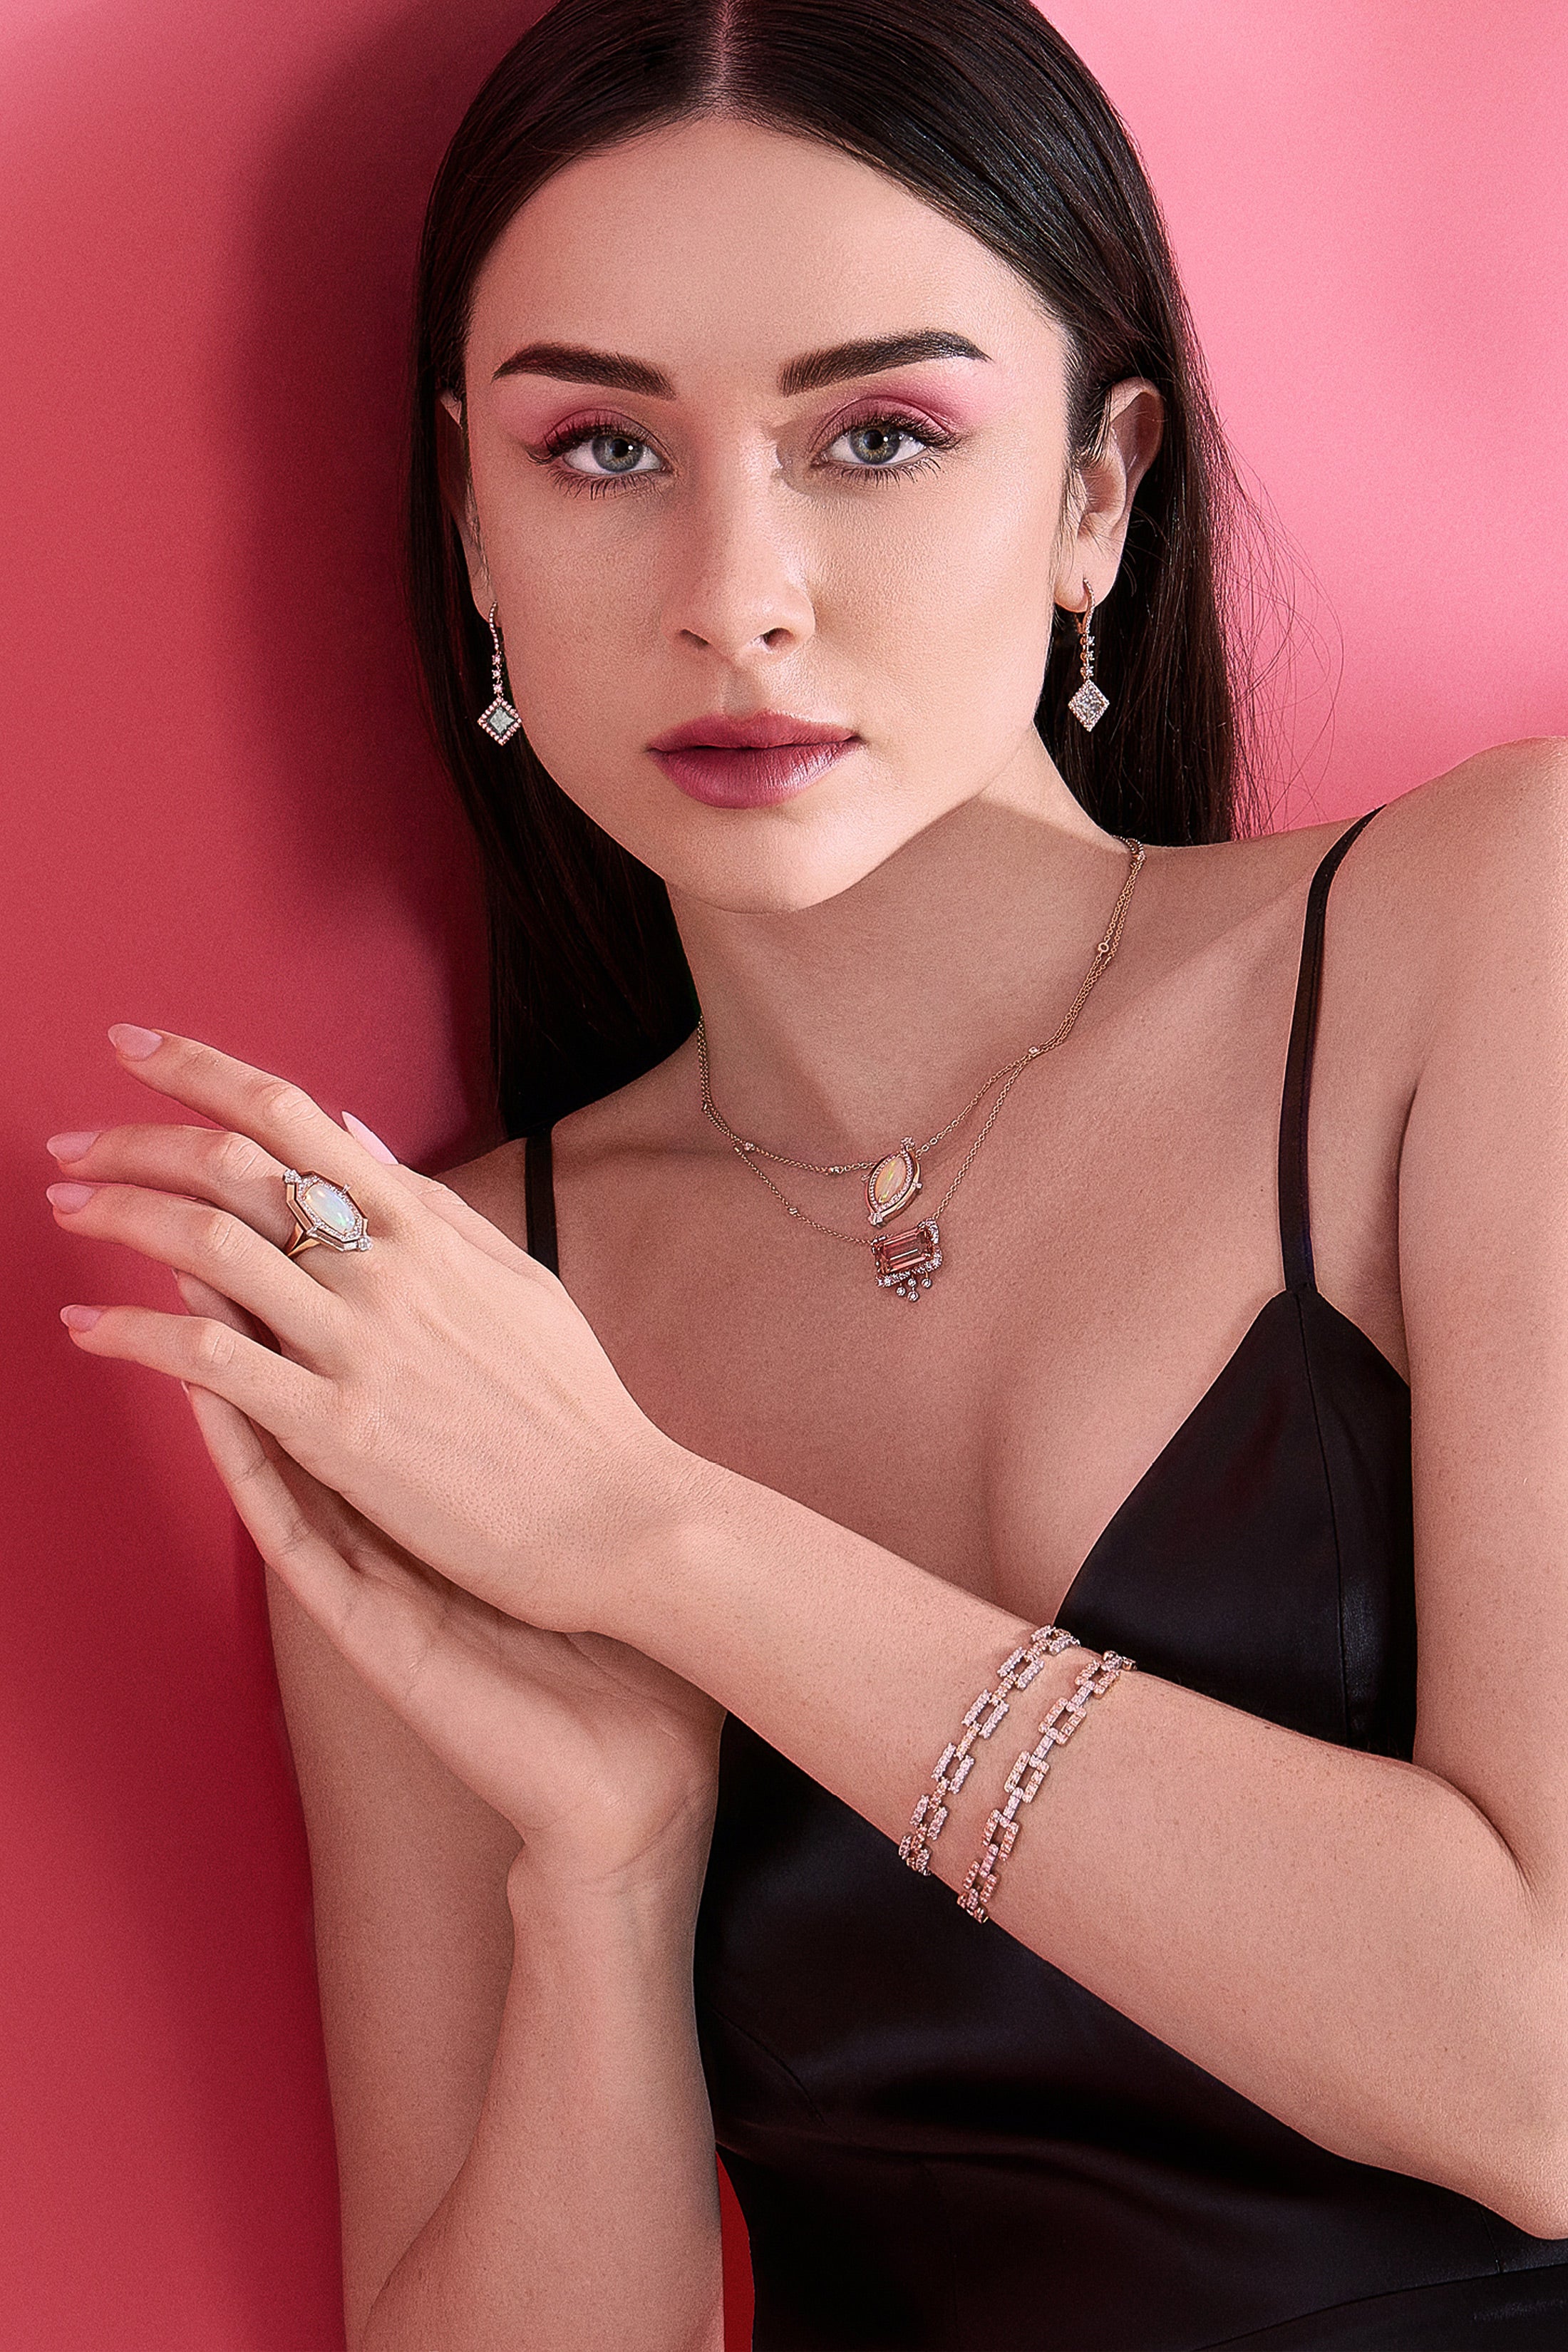 Argyle Pink™ Diamond Link Bracelet - Pink Diamonds, J FINE - J Fine, bracelet - Pink Diamond Jewelry, argyle-link-bracelet - Argyle Pink Diamonds